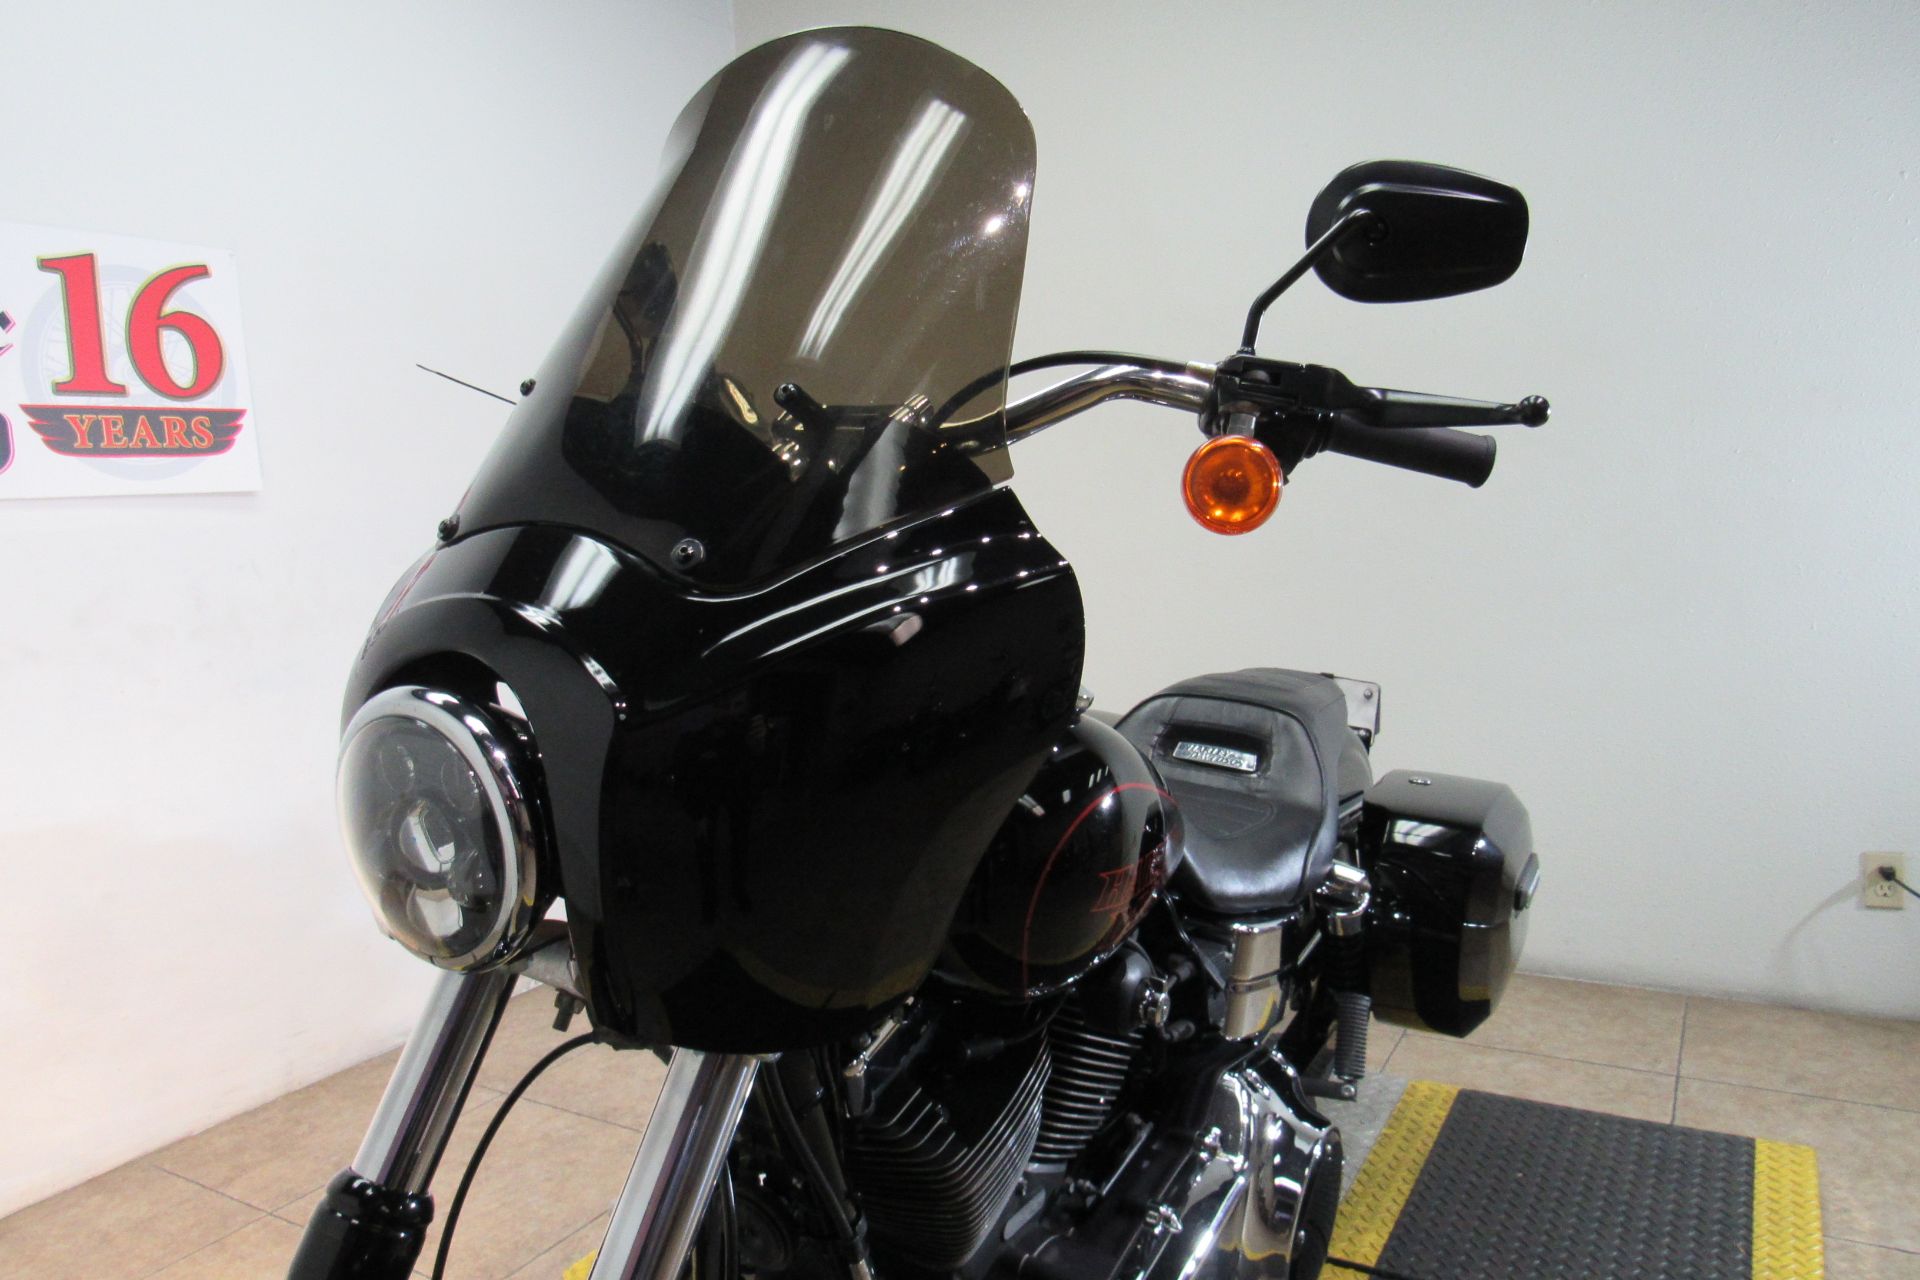 2016 Harley-Davidson Low Rider® in Temecula, California - Photo 8